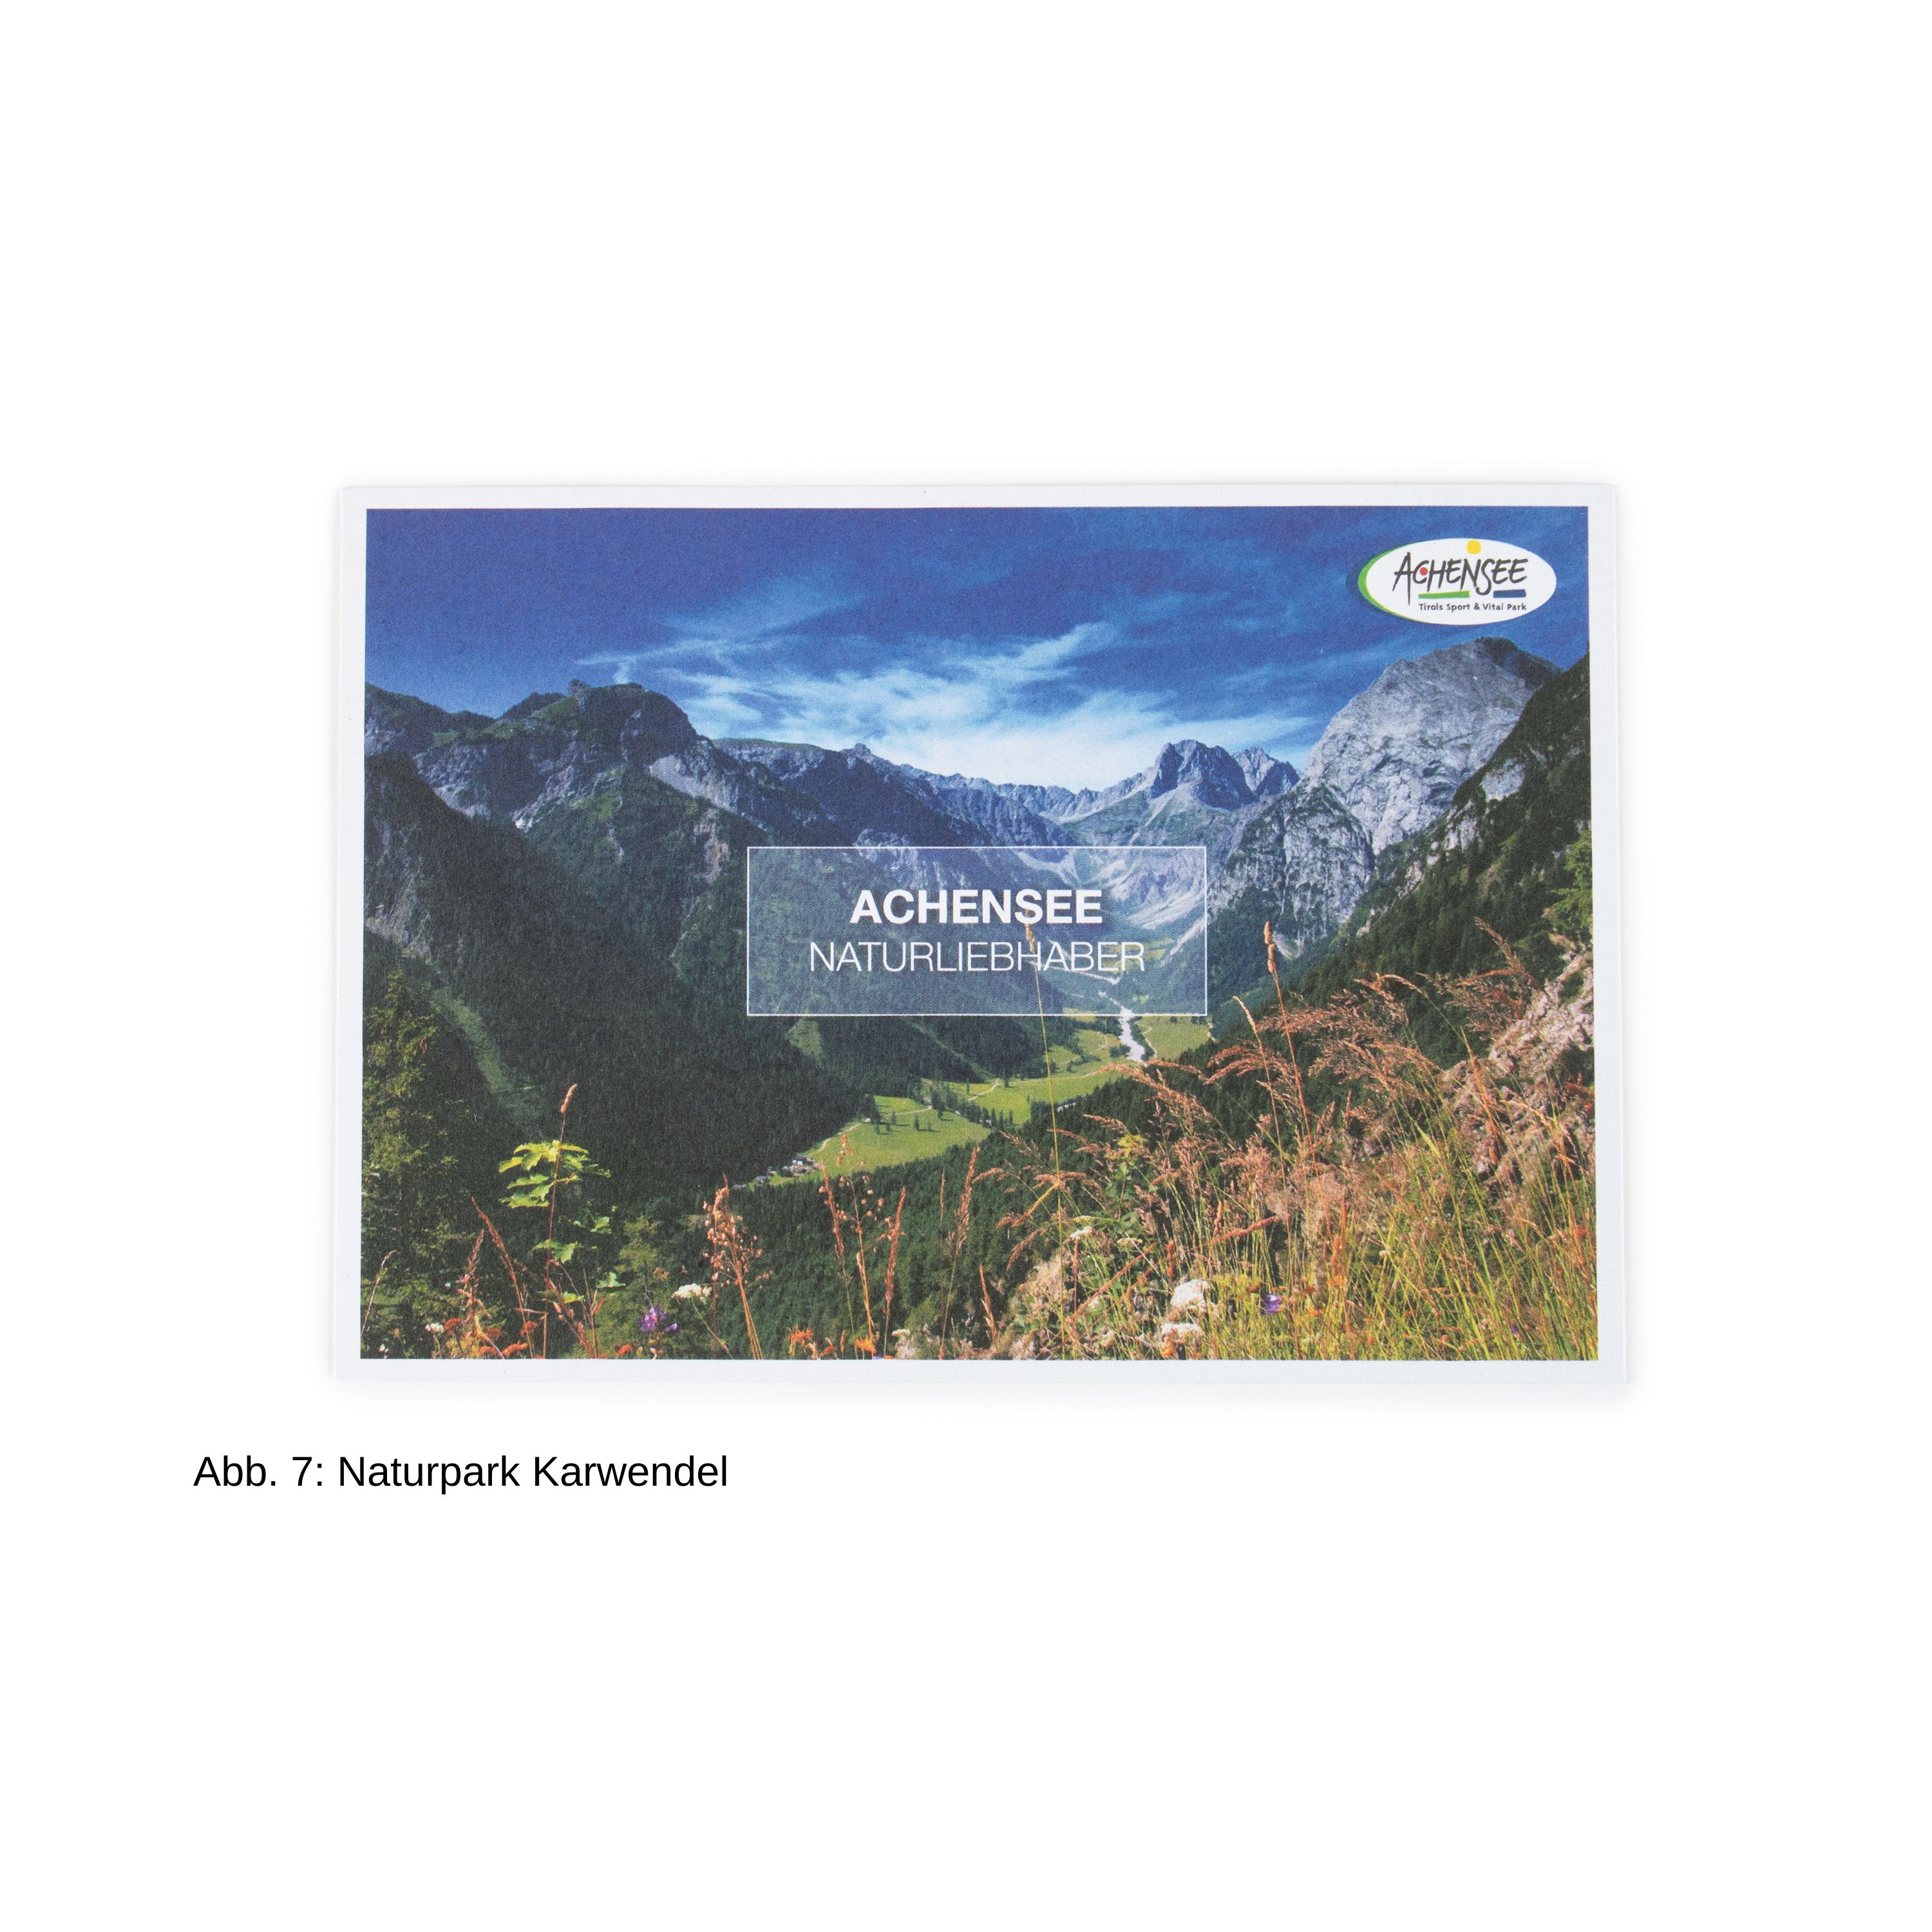 Postkarte des Falzthurntals im Karwendelgebirge